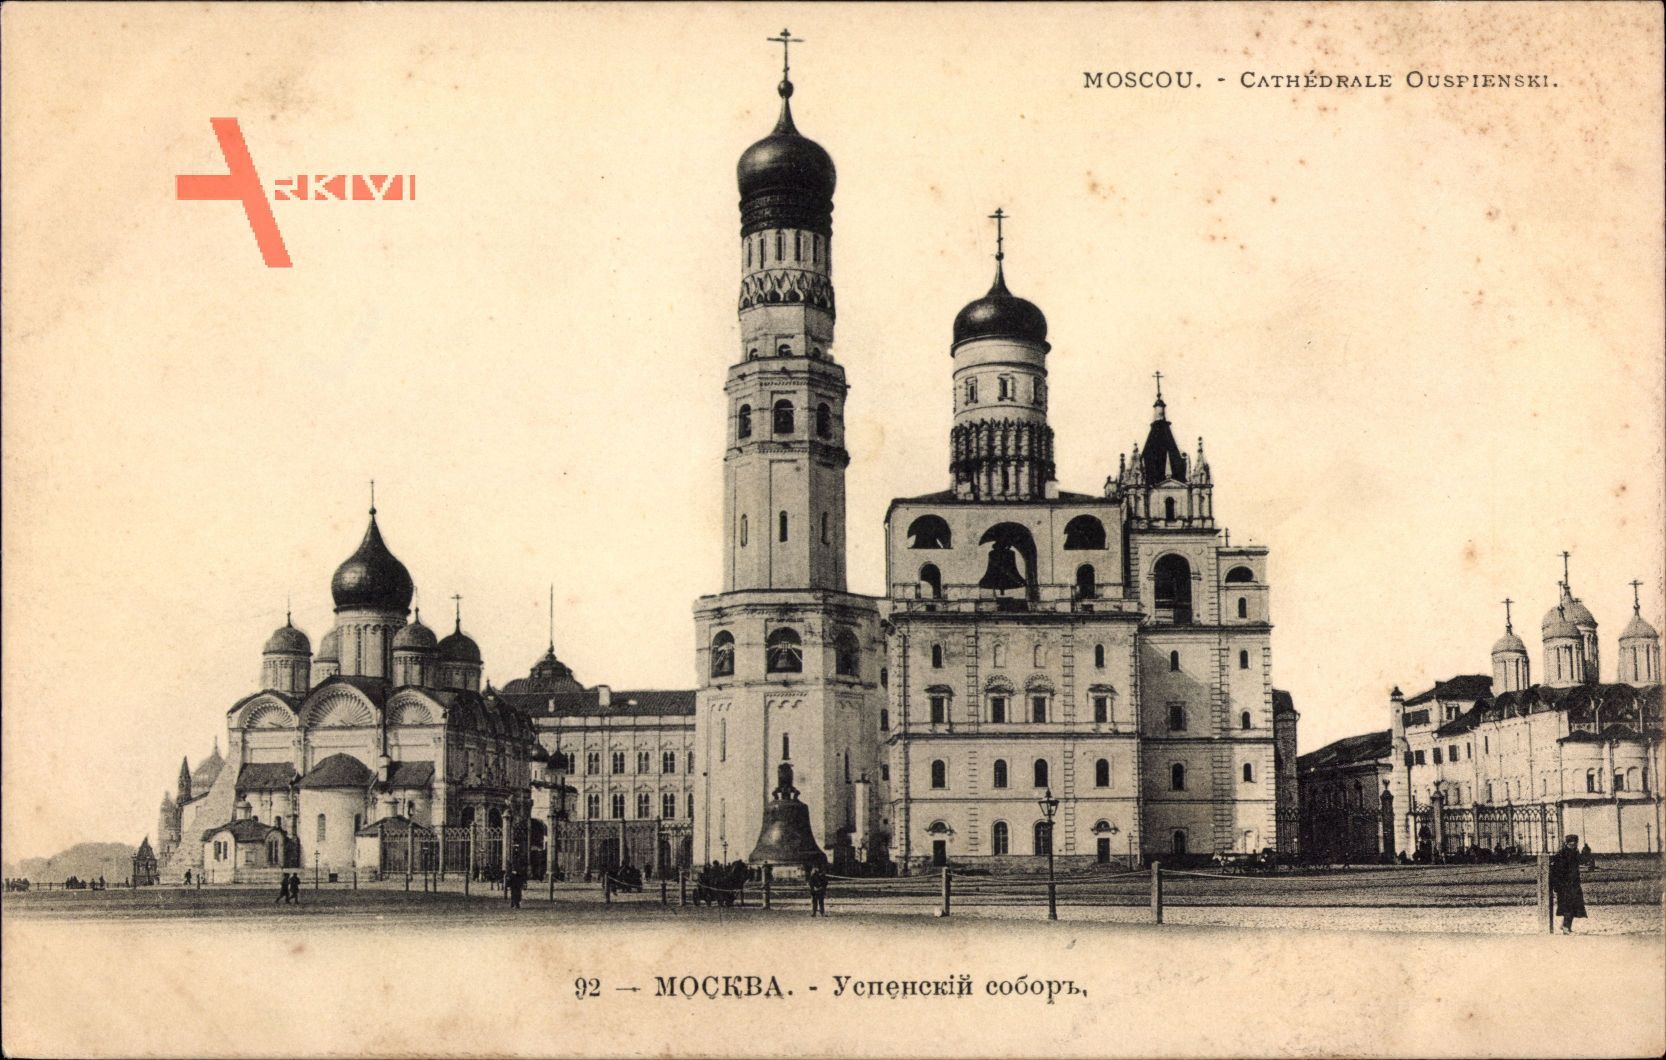 Moskau Russland, Cathédrale Ouspienski, Kathedrale